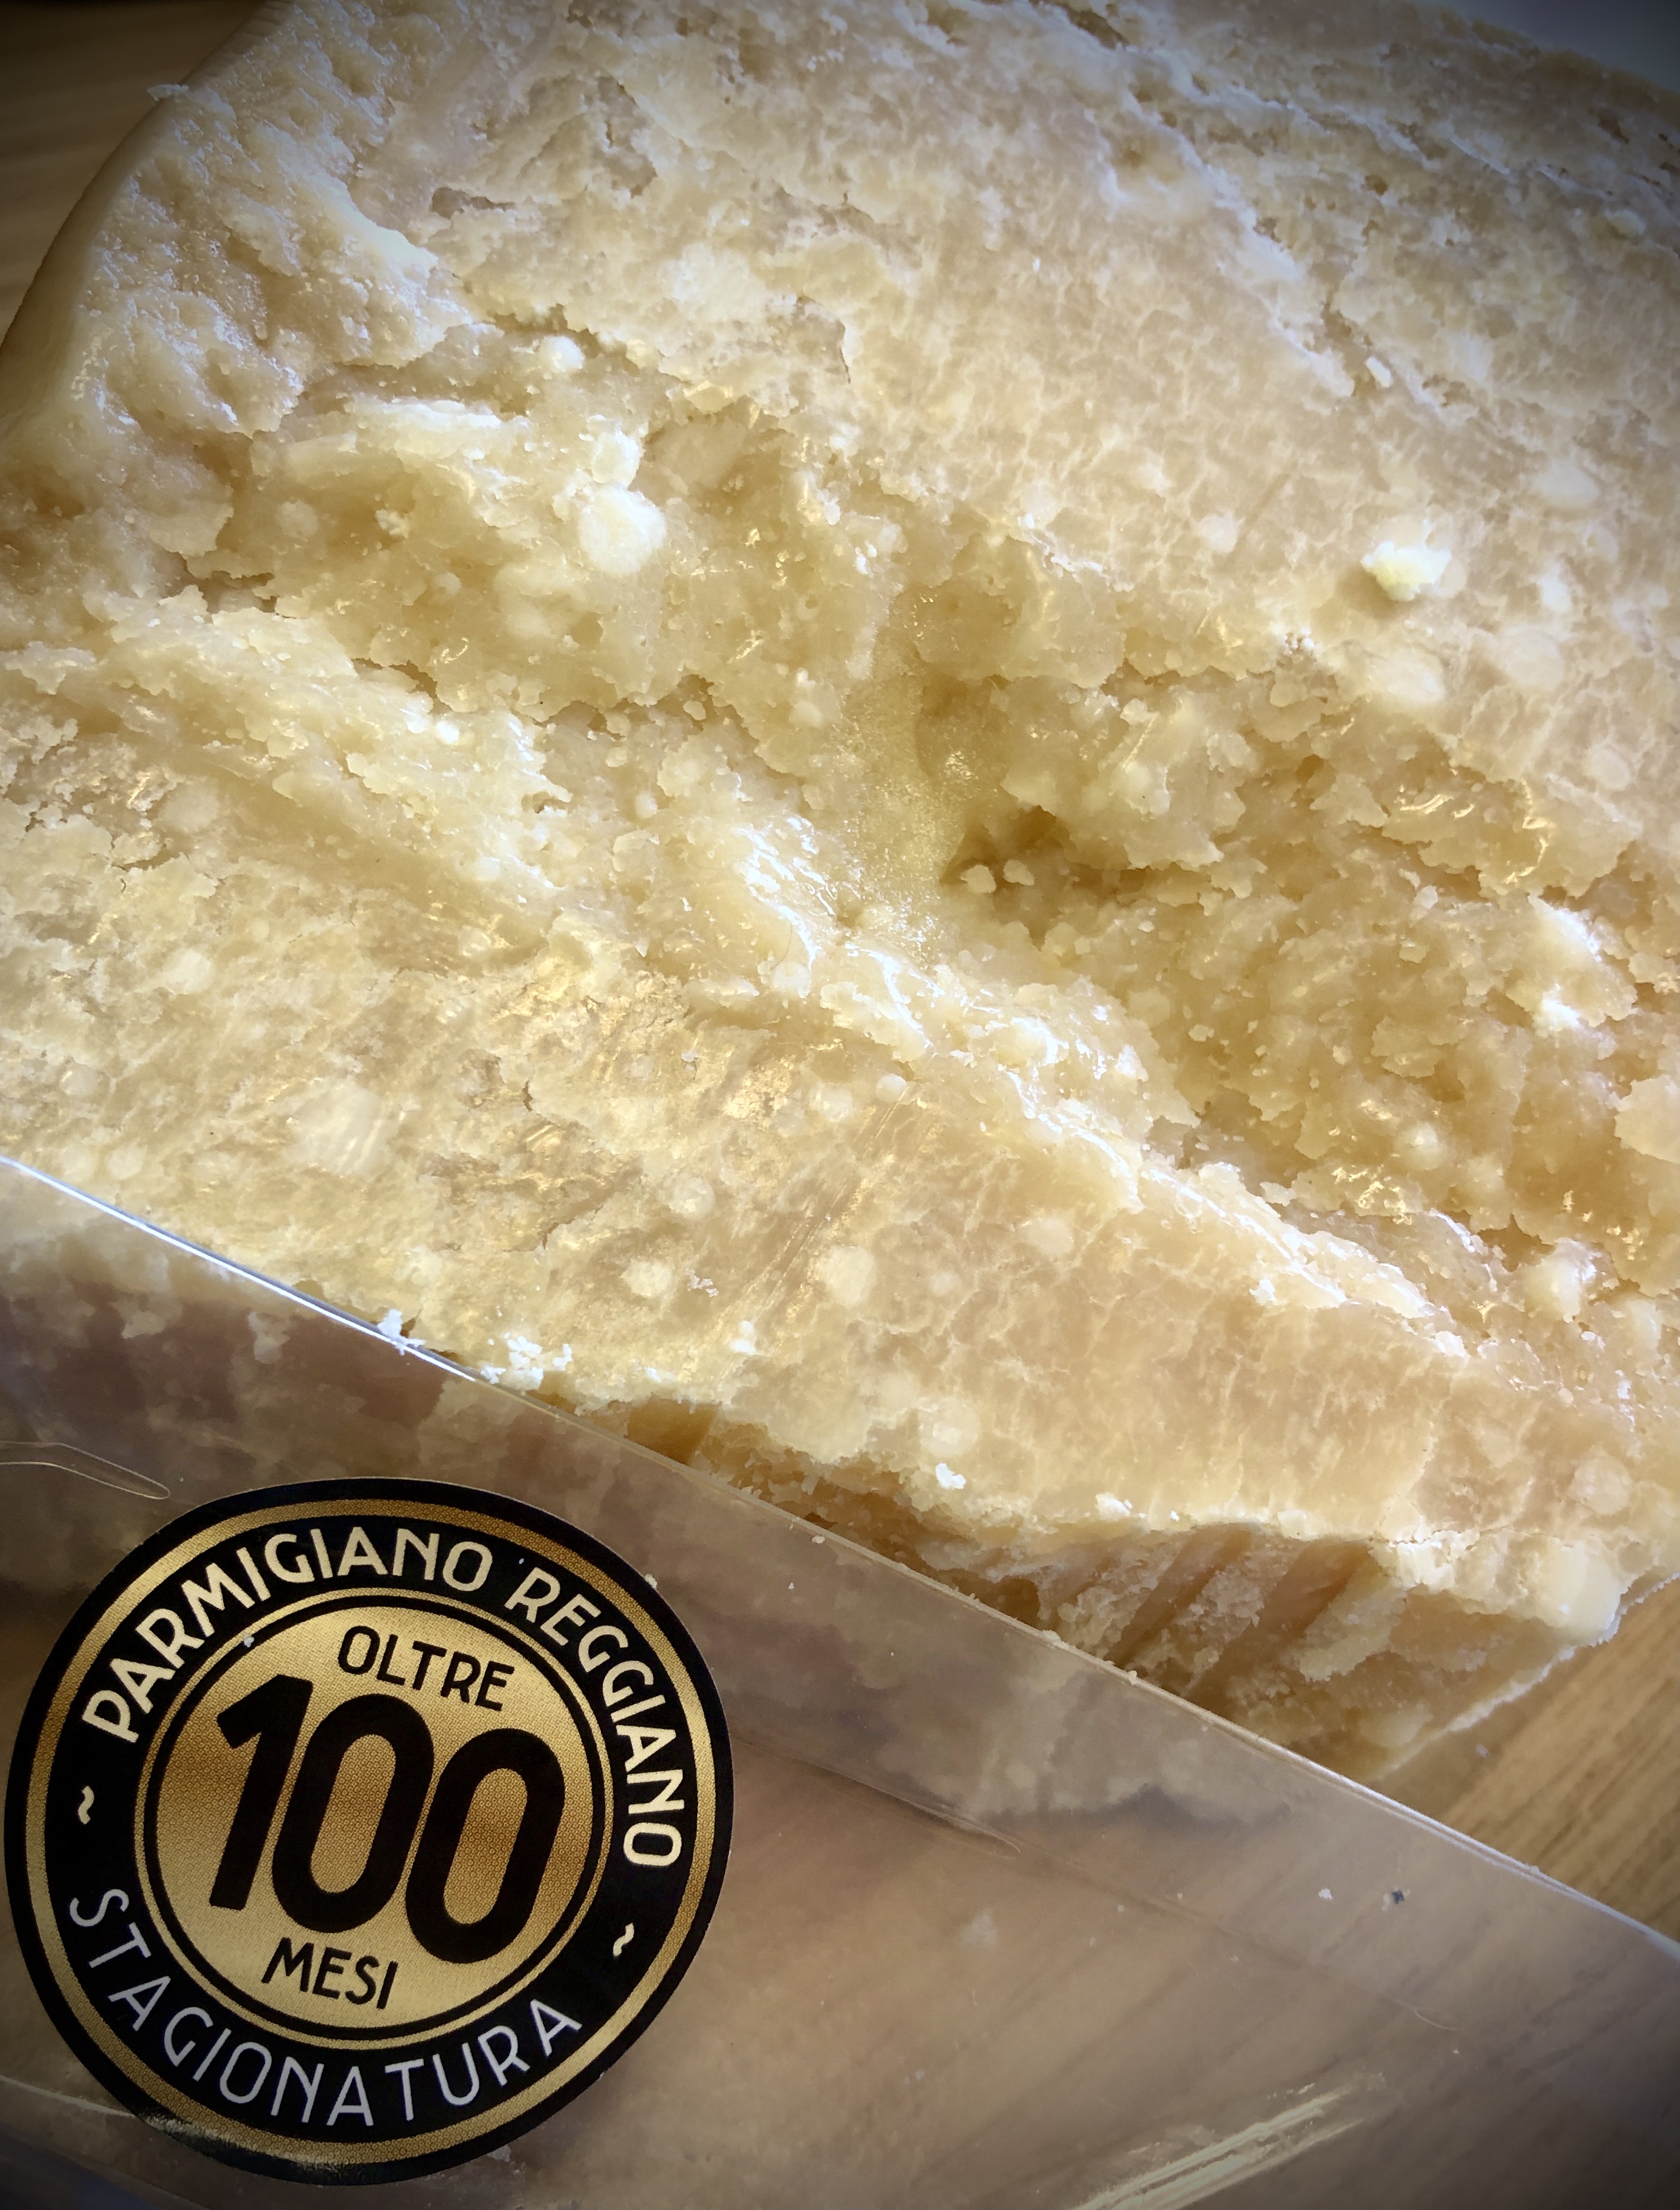 100 Monate Parmigiano Reggiano DOP Superiore "2121" Parmesan Extra Stravecchione